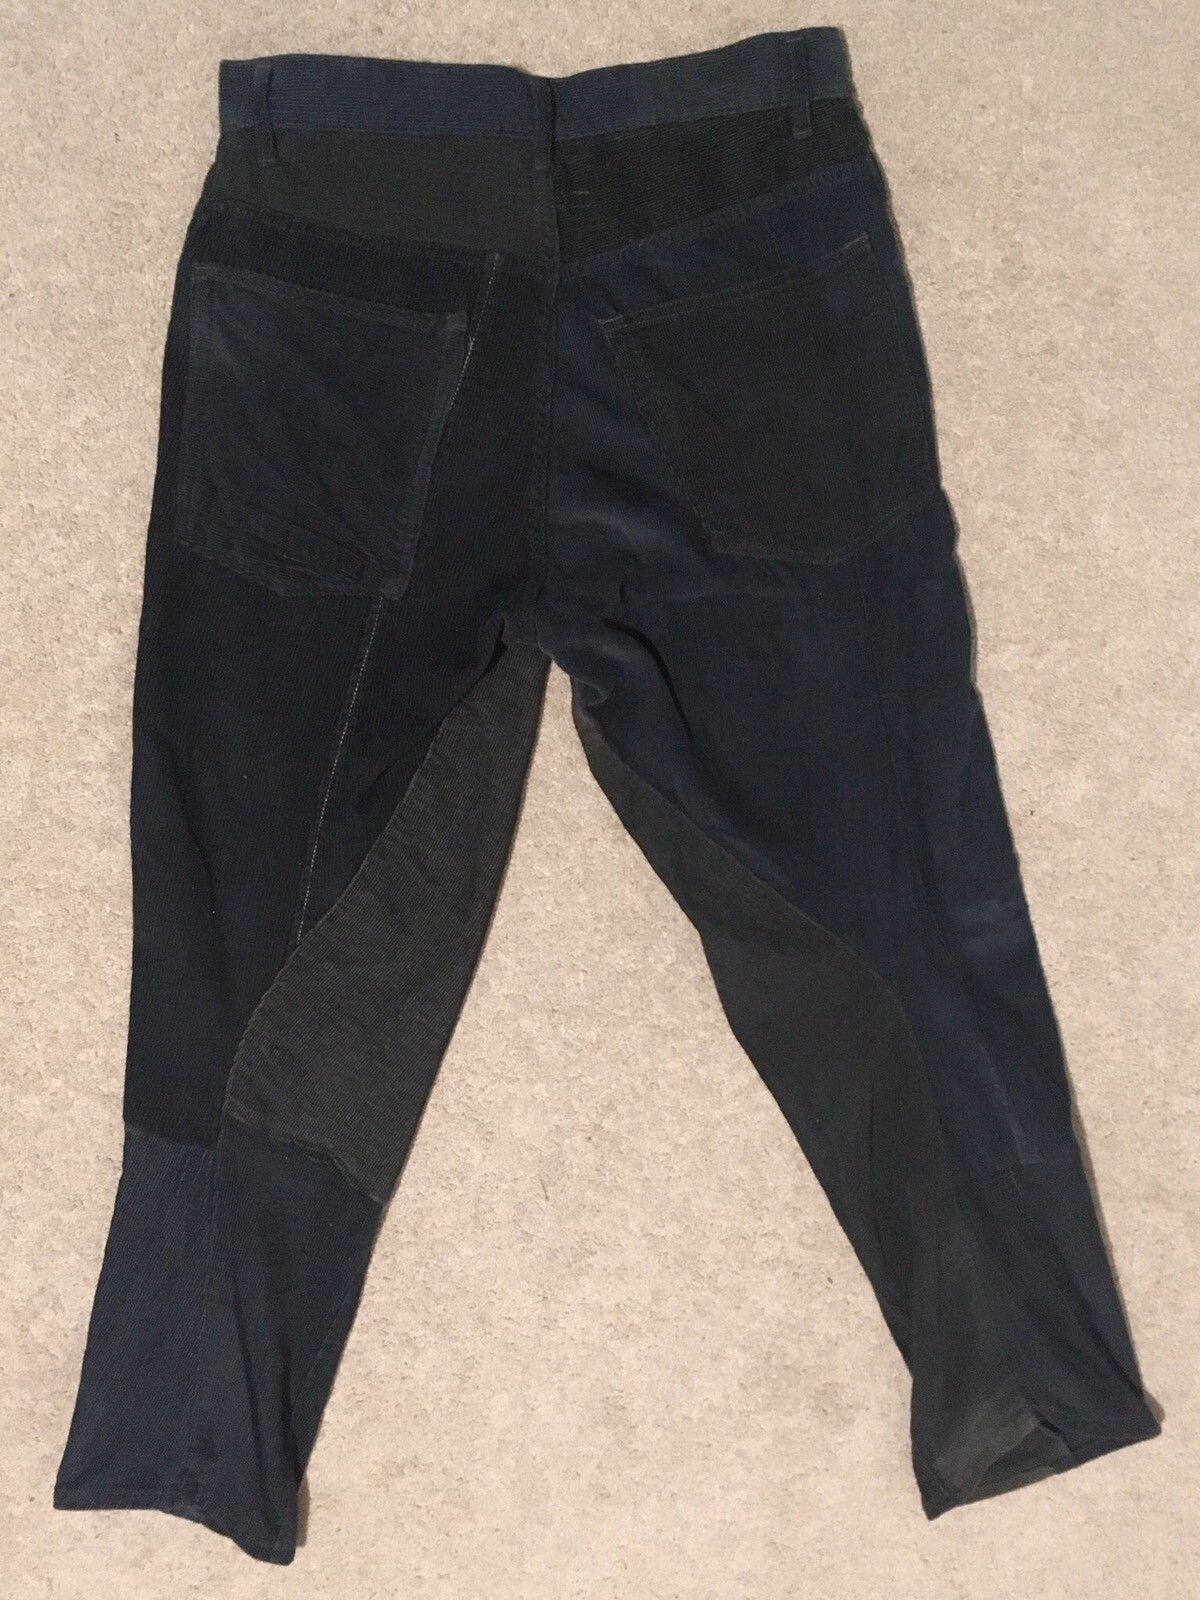 Needles Rebuild Patchwork Corduroy Trousers Size US 29 - 6 Thumbnail